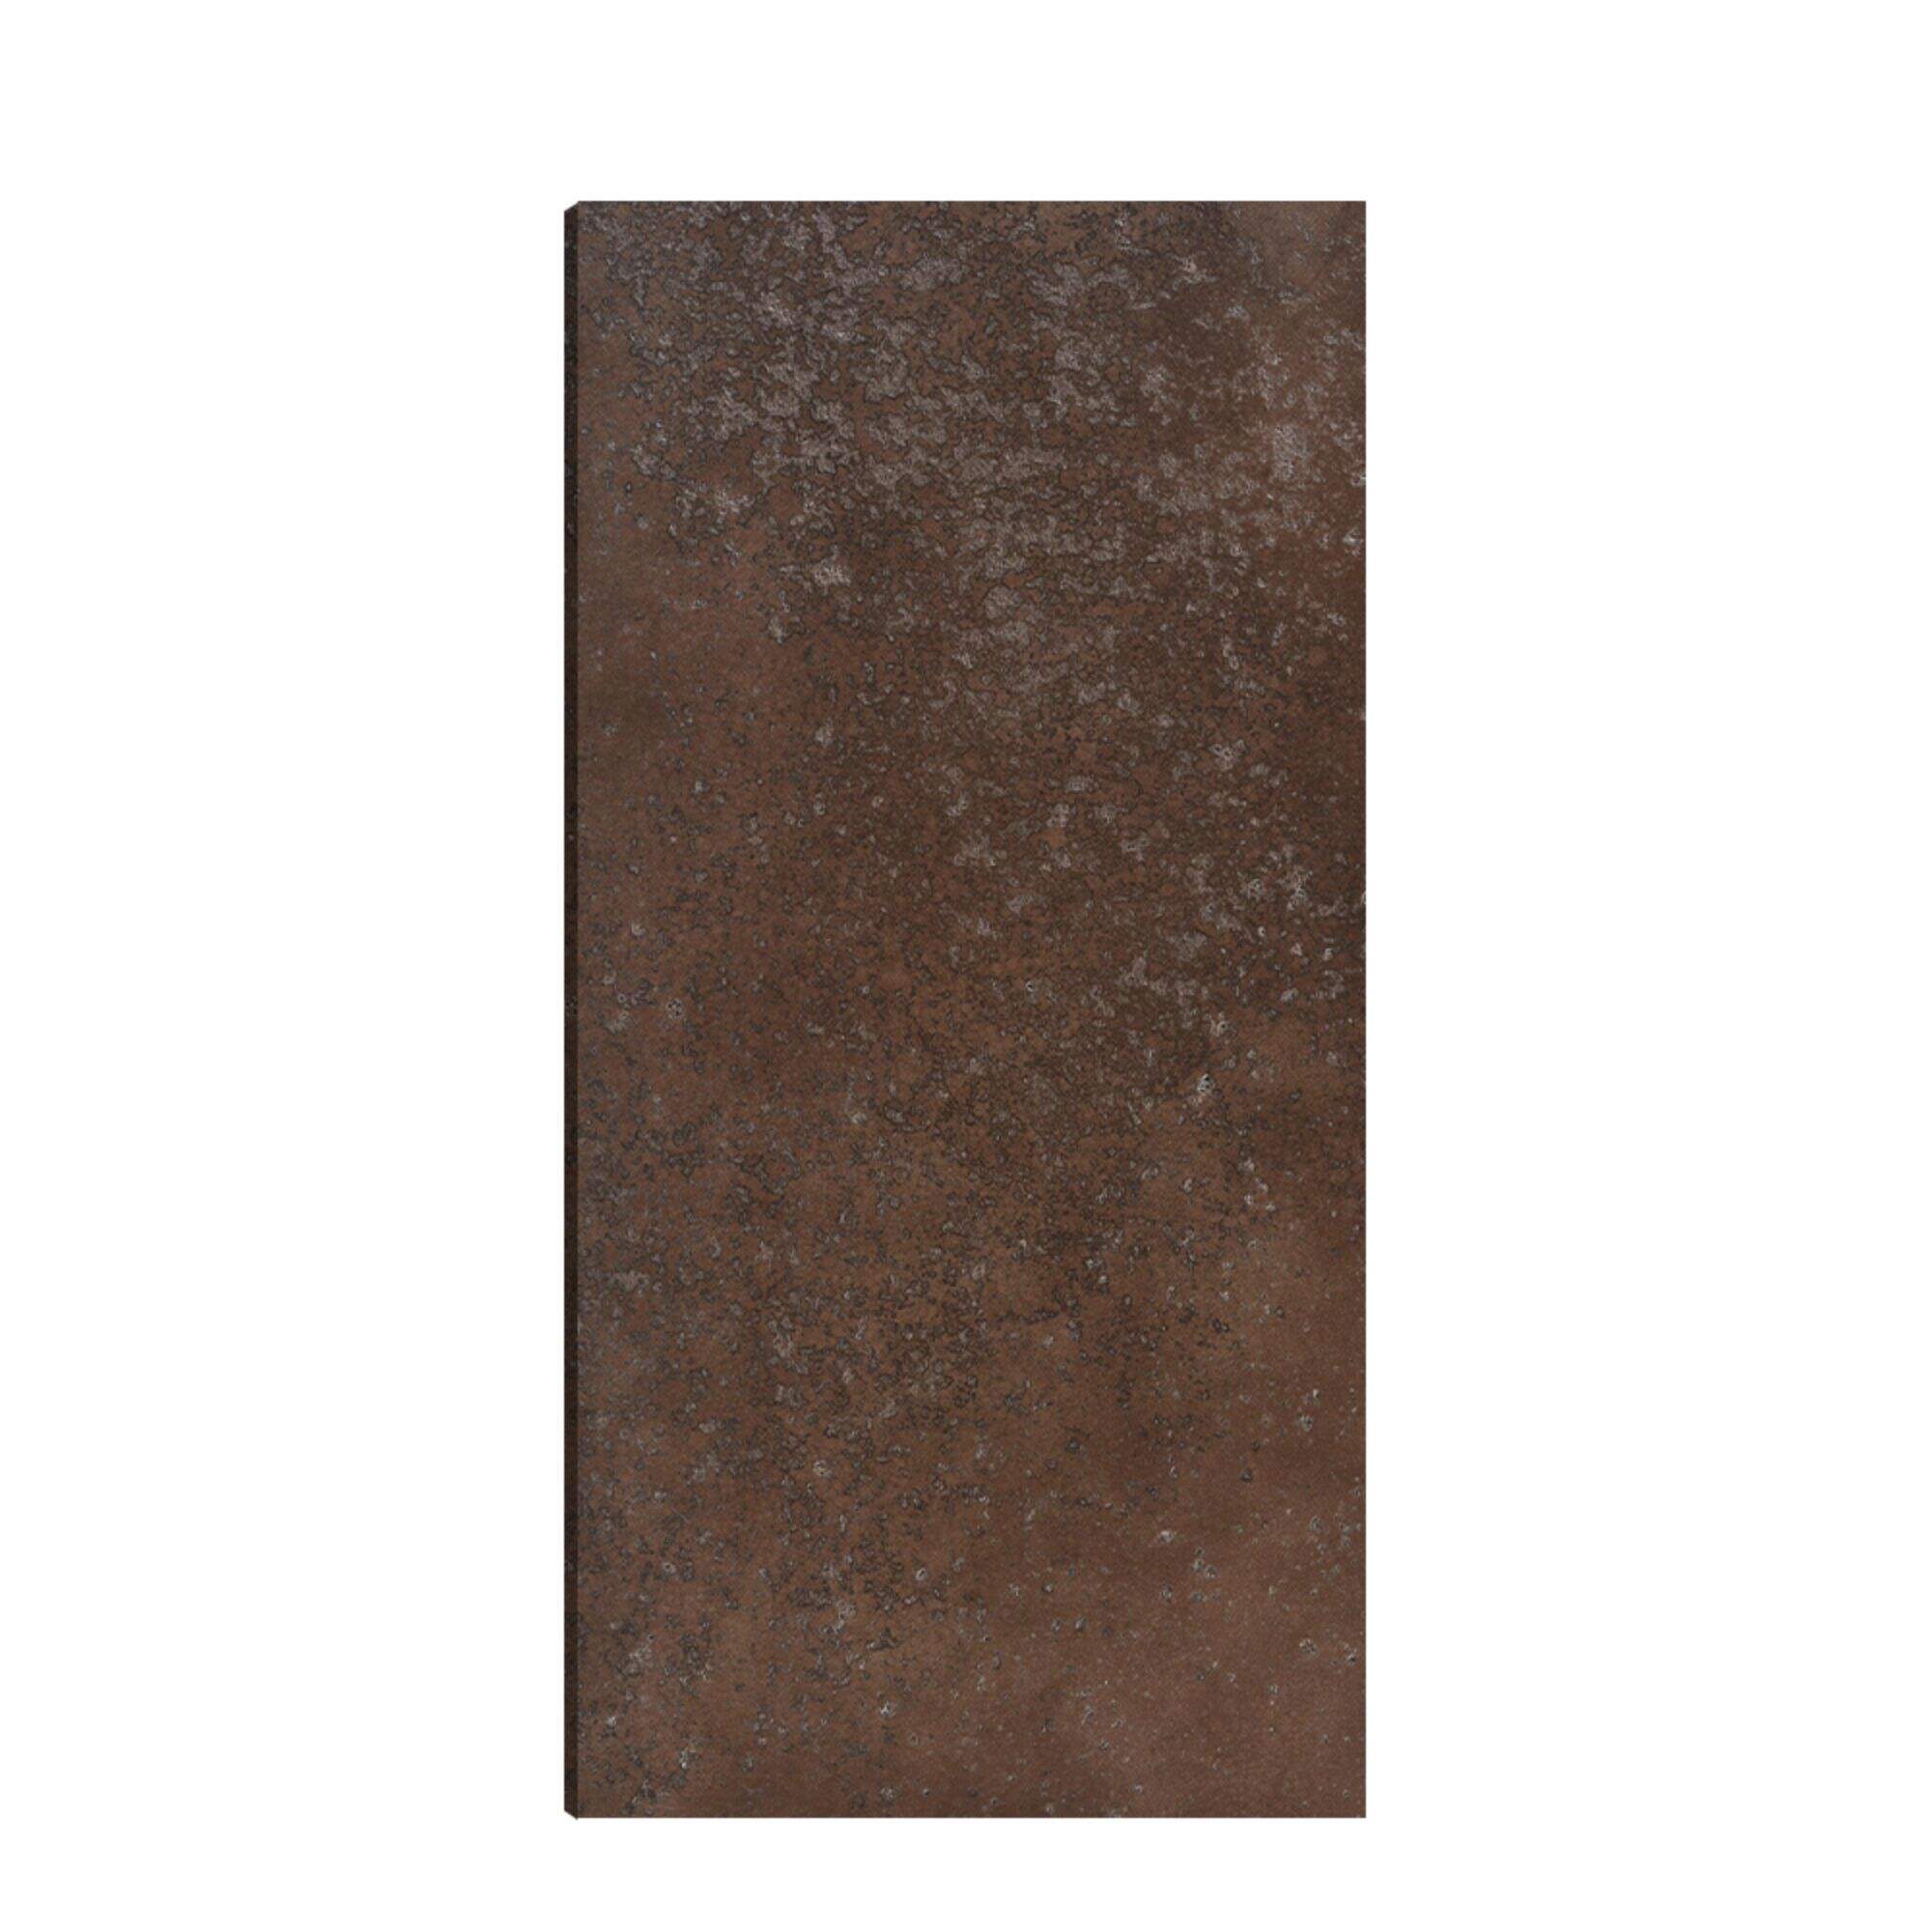 Antigue Bronze Gilt Sandstone Cement Board